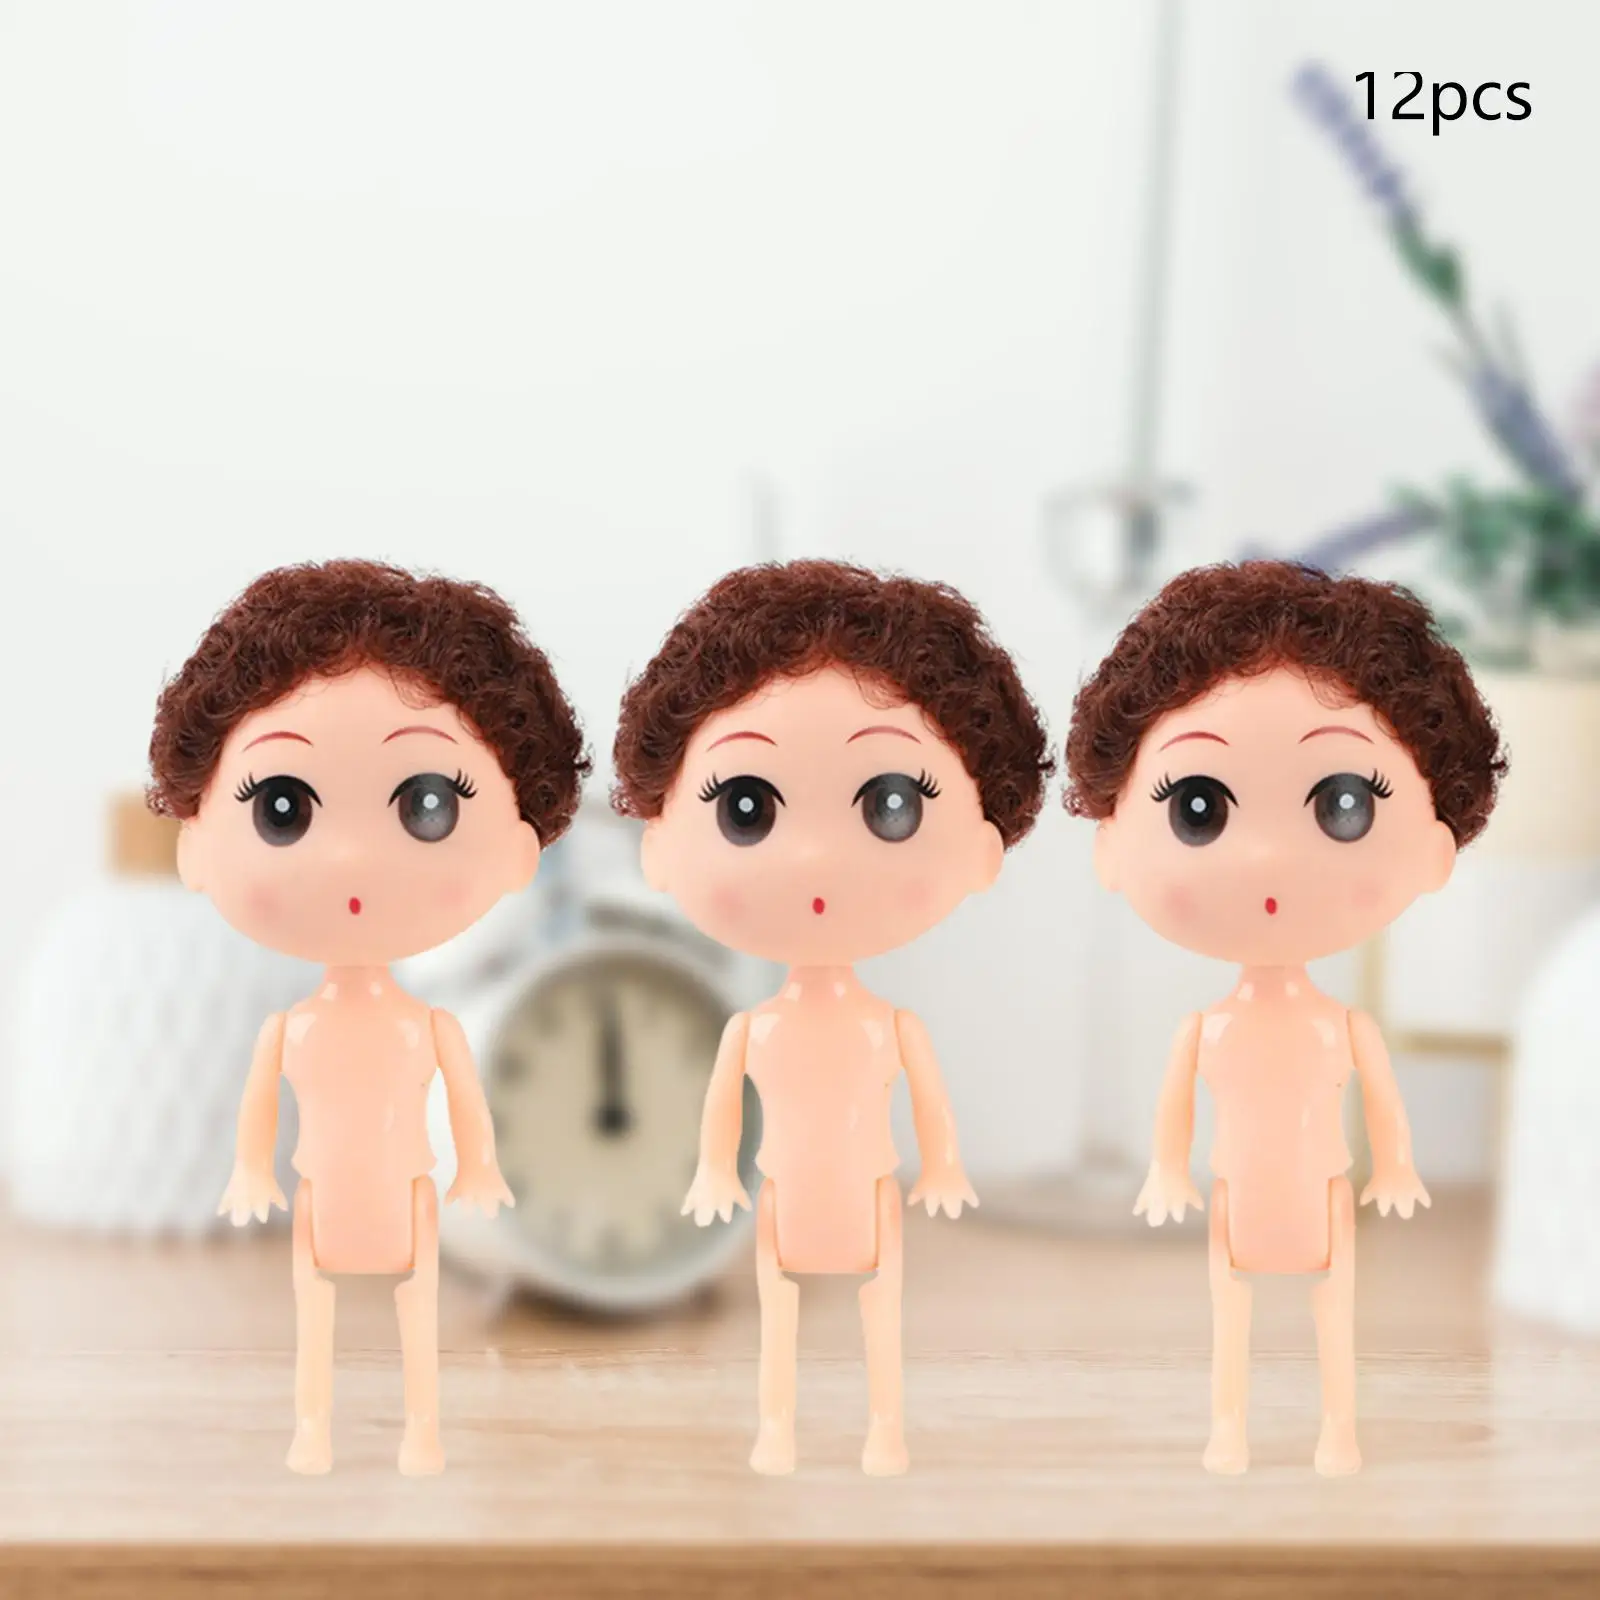 Boys Dolls 12cm Fashion Dolls Toy Moveable for Boys Children Girls Kids Gifts